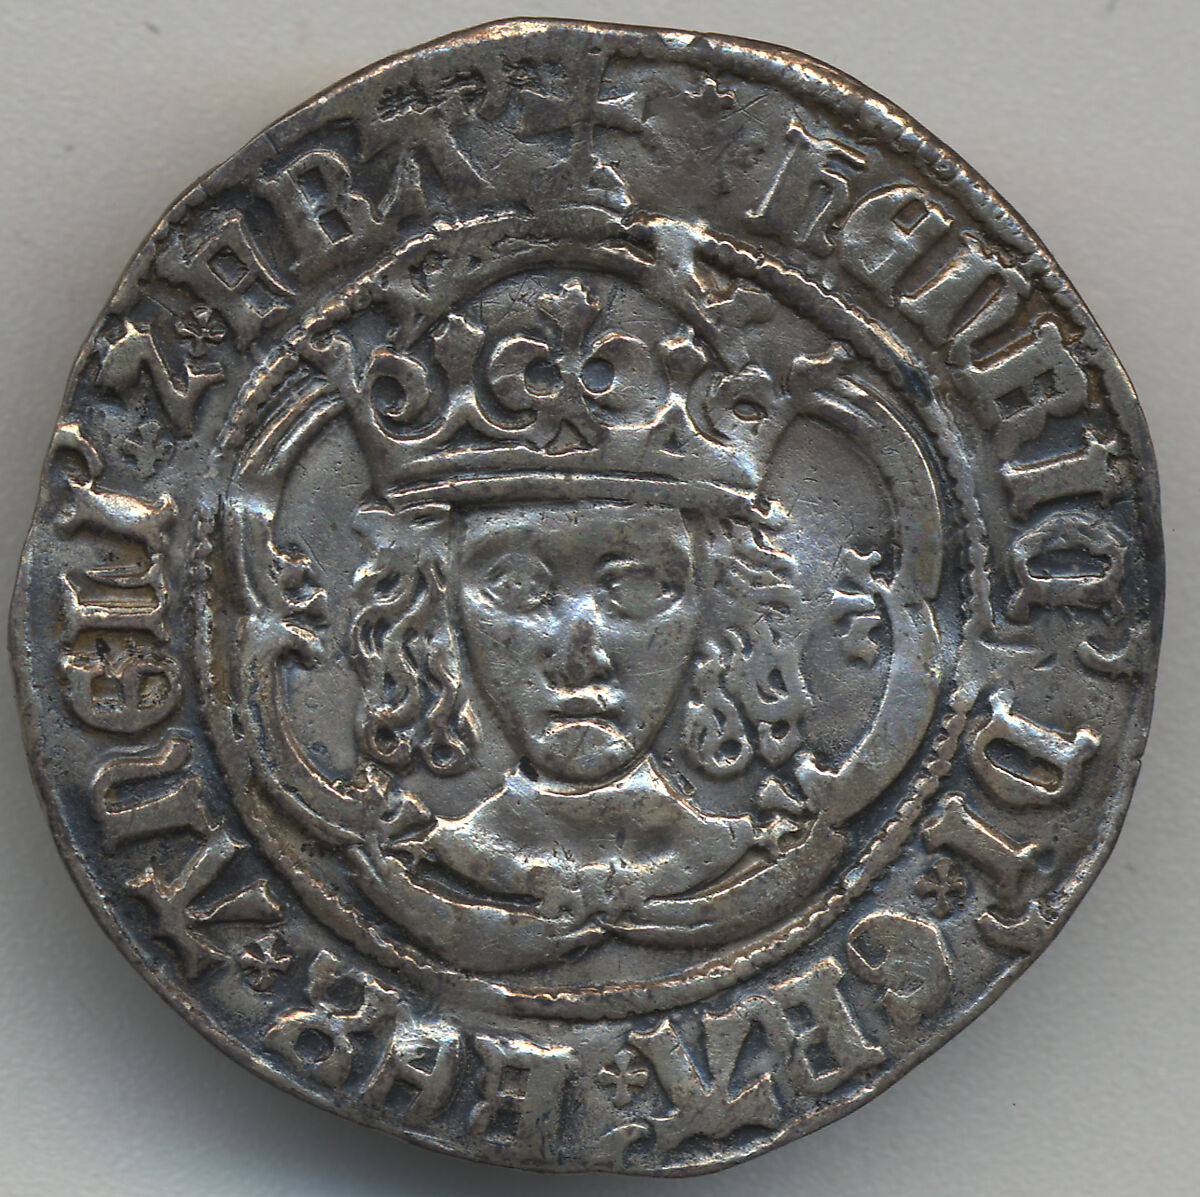 Half Groat of Henry VII (1485-1509), Silver, British